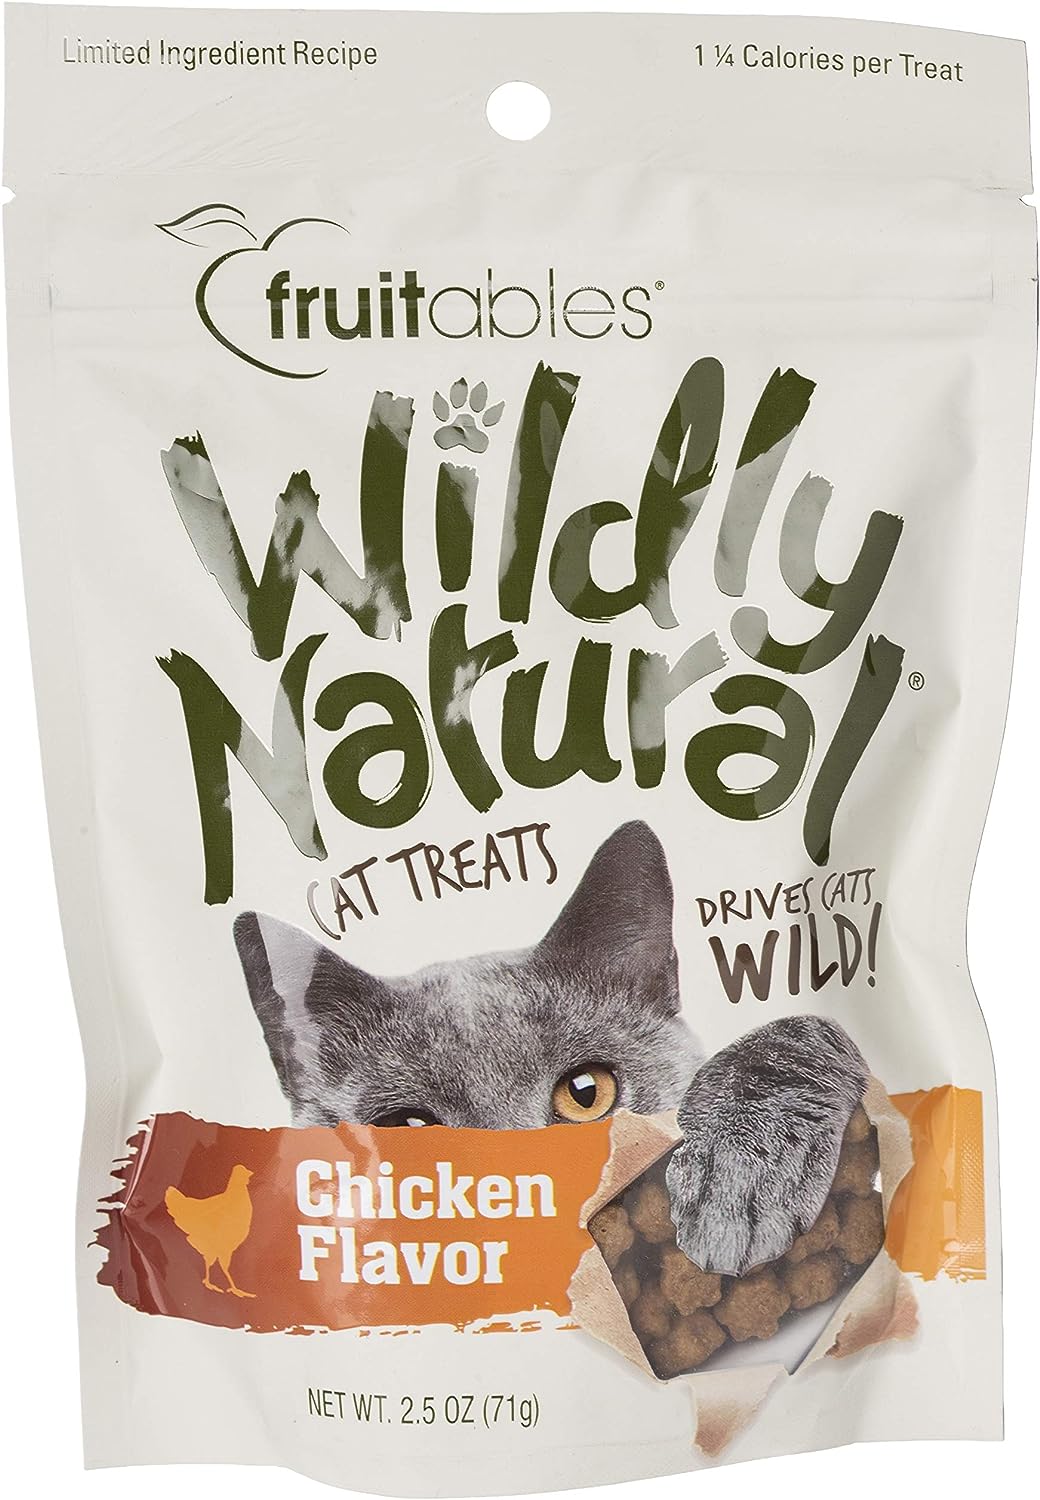 Fruitables wildly Natural Cat Treats Chicken flavor (71g)